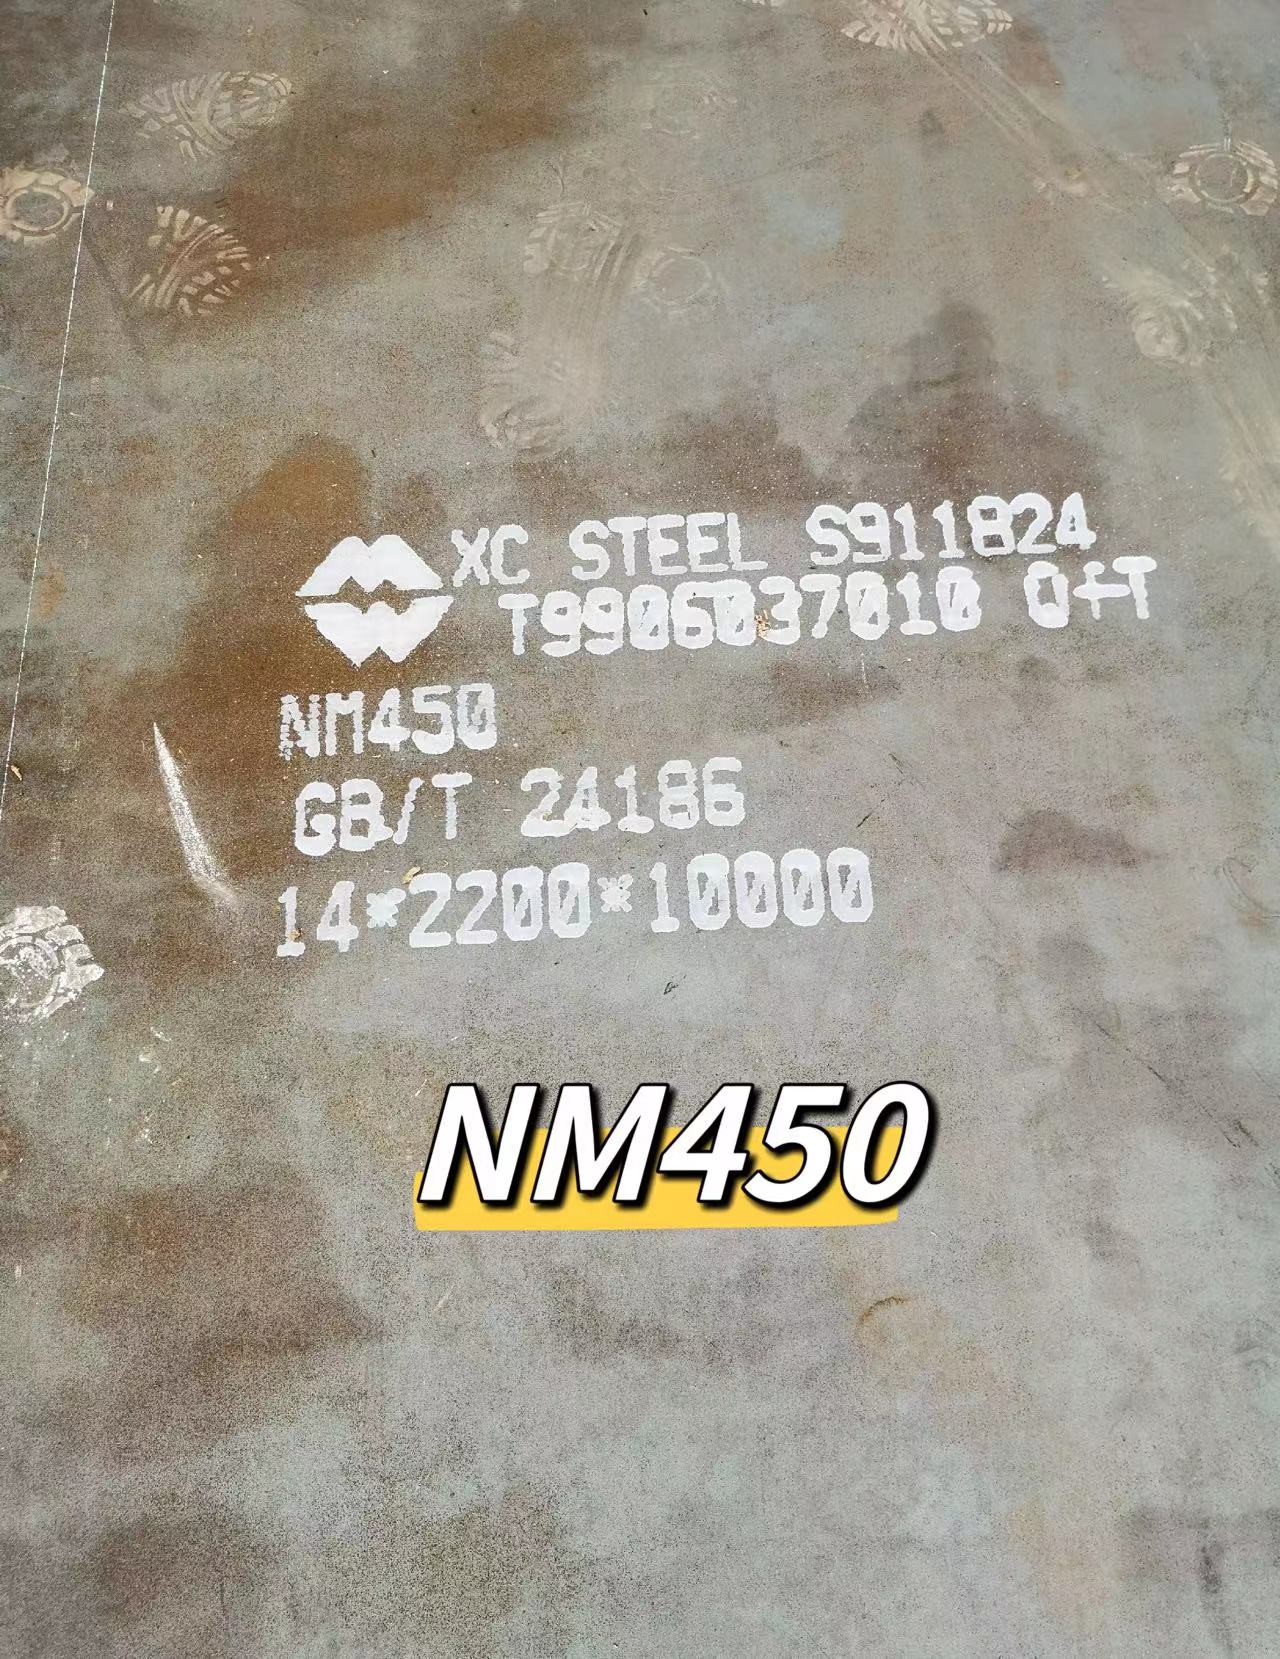 NM450 plate